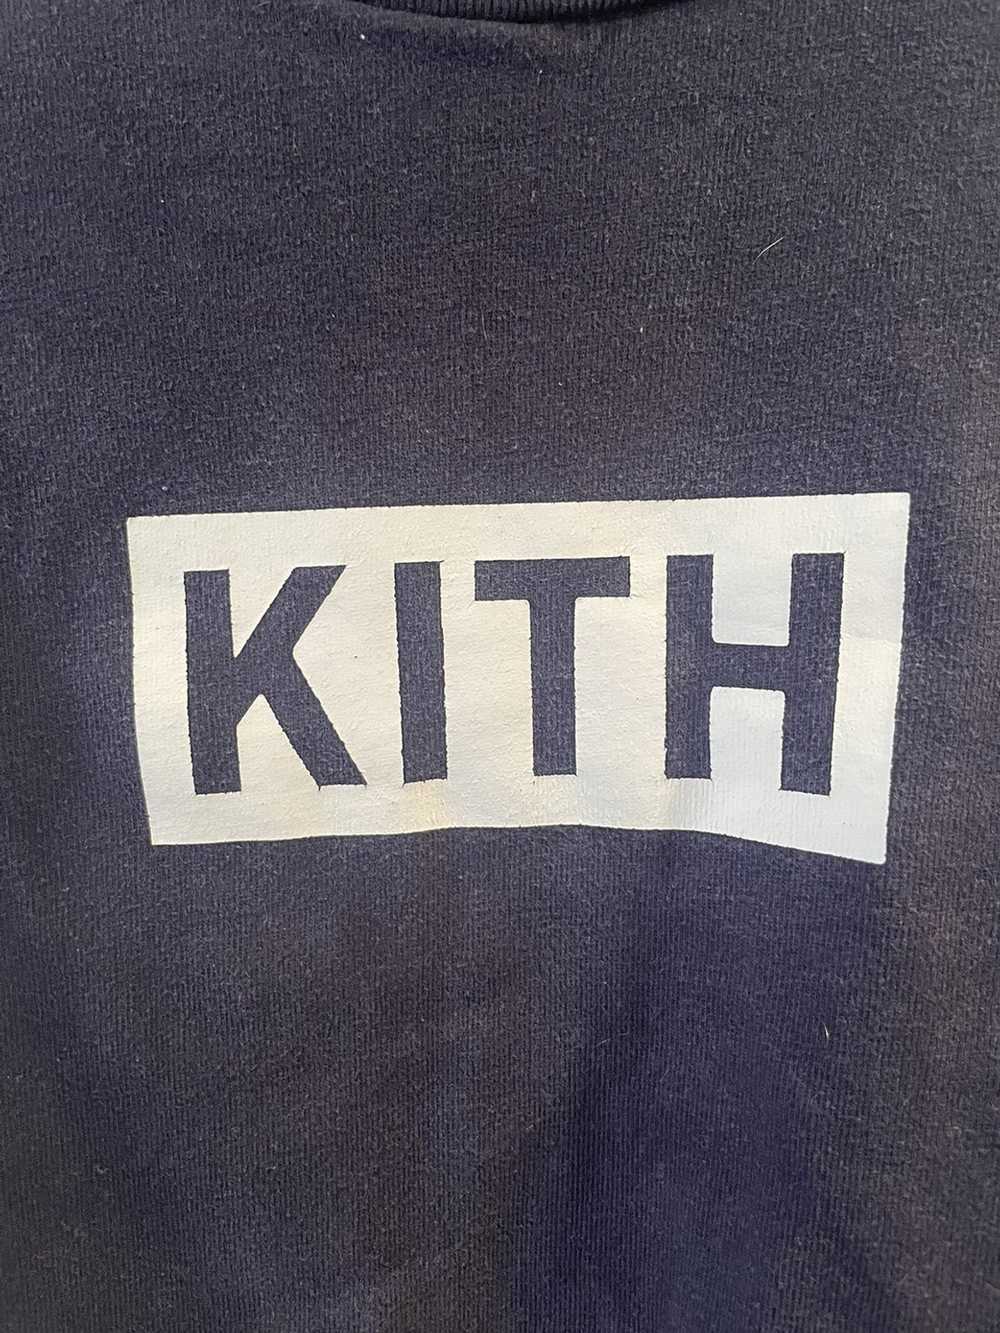 Kith Kith box logo t shirt - image 3